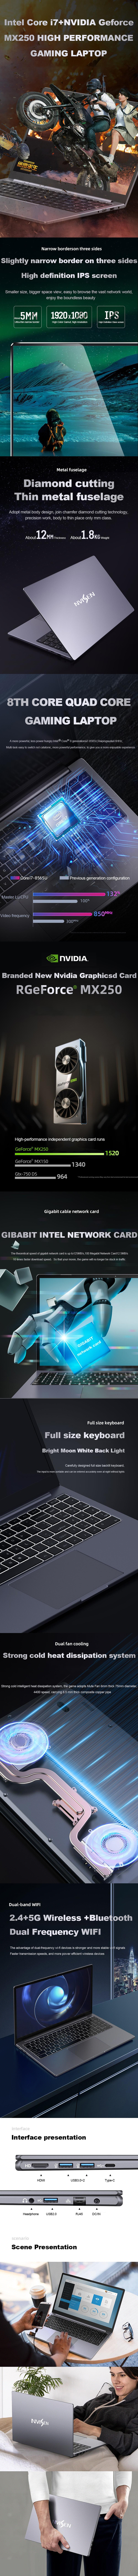 NVISEN Y-GLX253 15.6 inch Intel i7-8565U NVIDIA GeForce MX250 8GB 1TB SSD 5mm Narrow Bezel Backlit Notebook 26